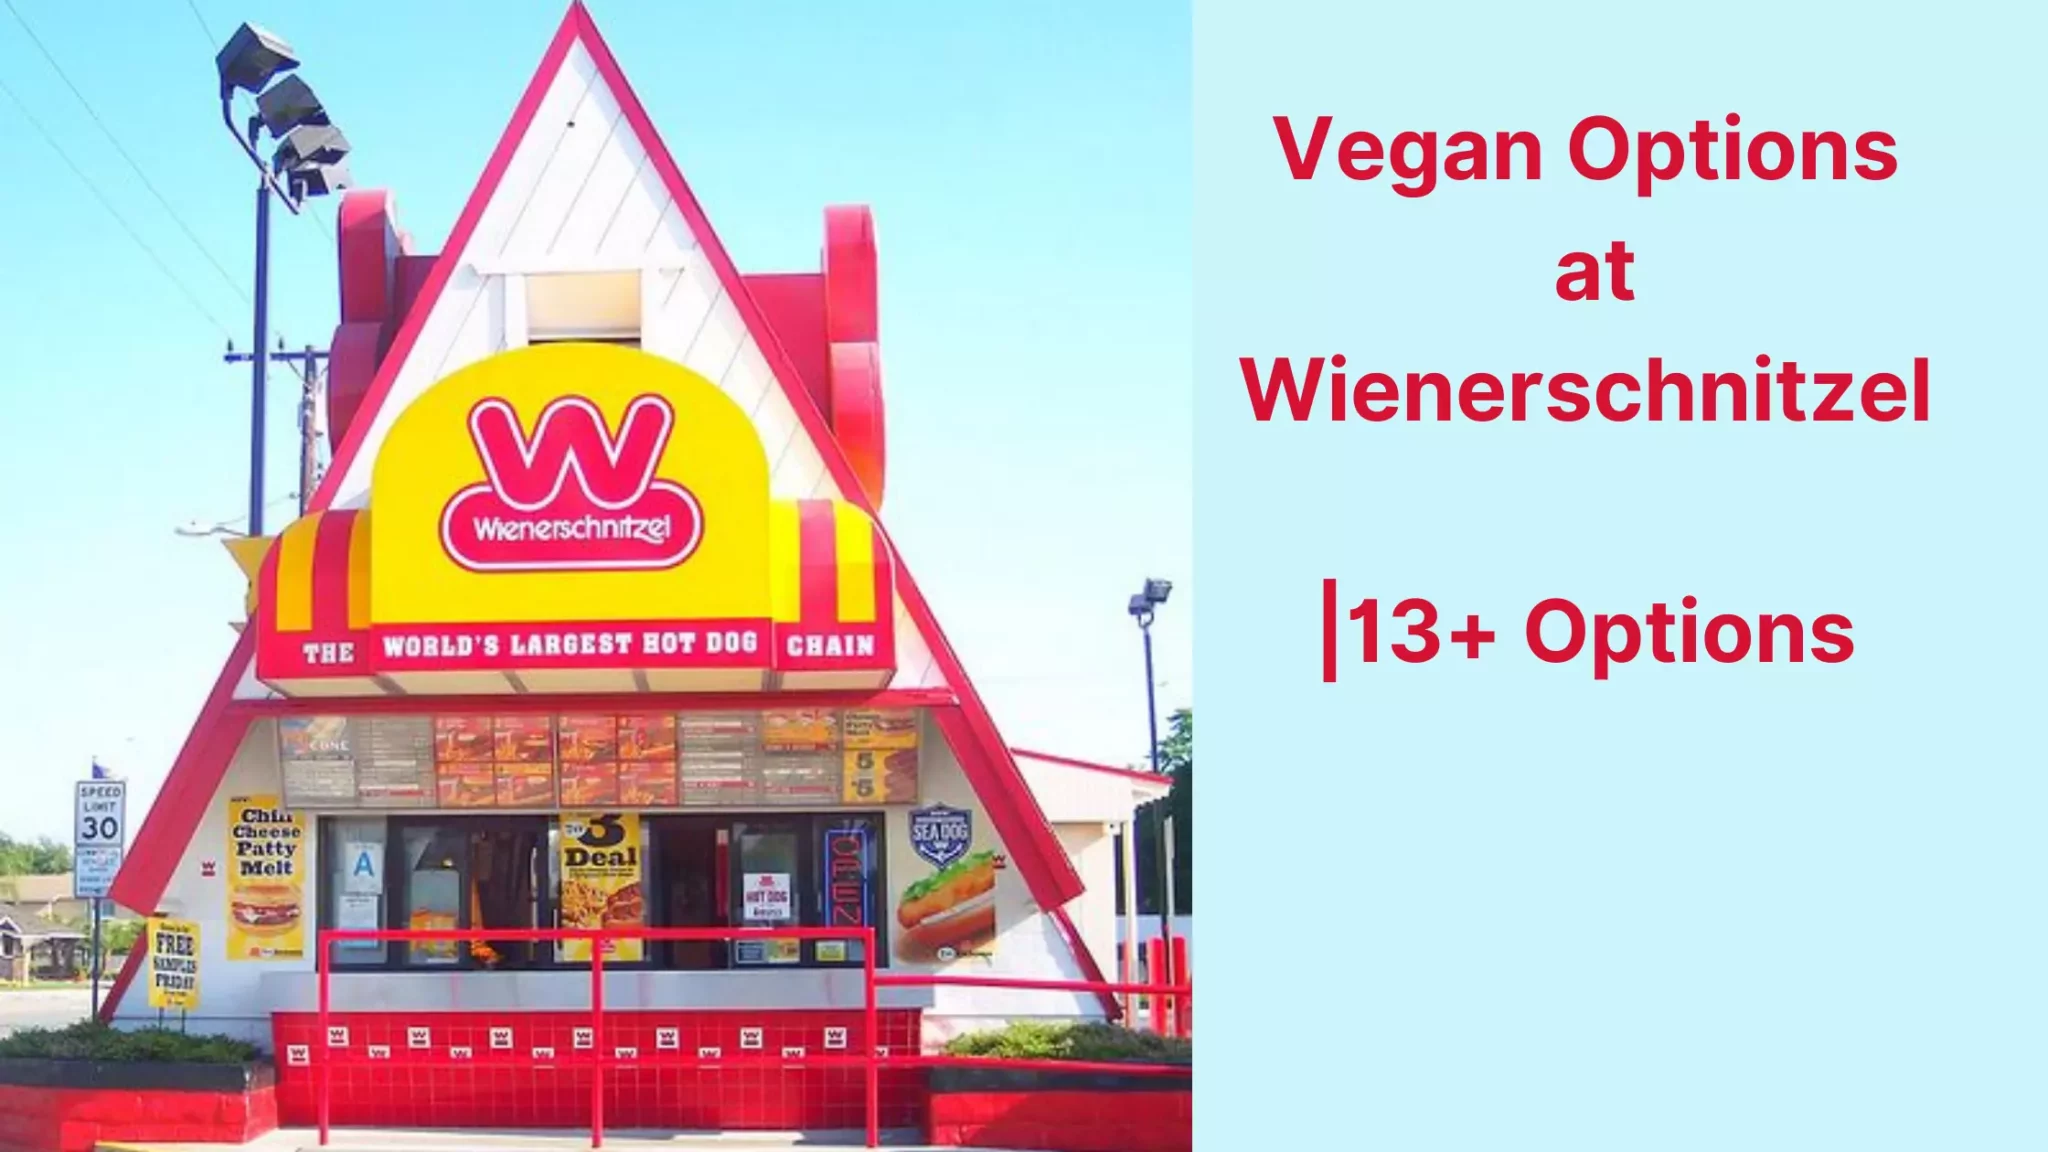 Vegan Options at Wienerschnitzel